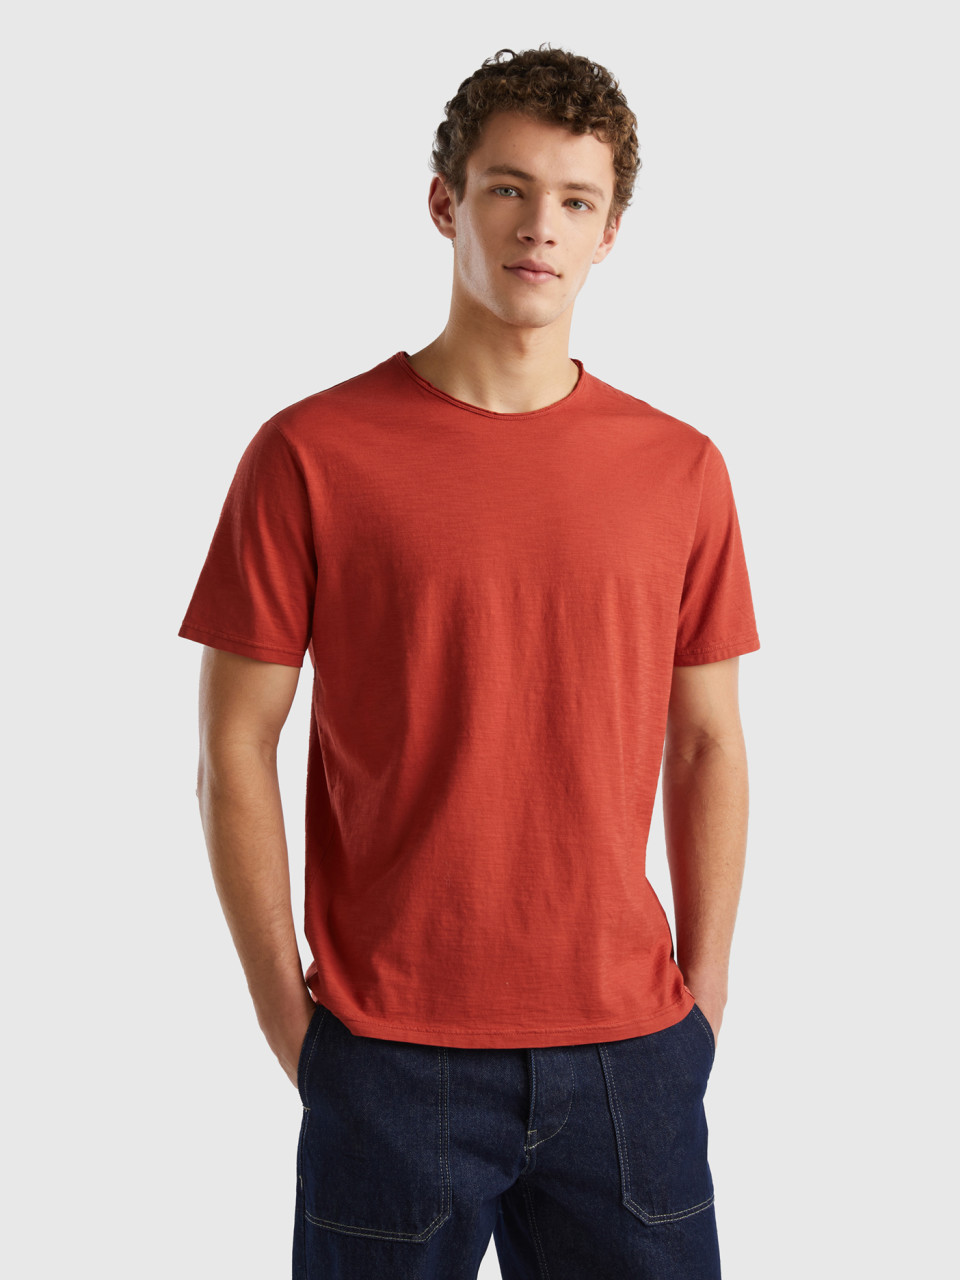 Benetton, Camiseta Rojo Oscuro De Algodón Flameado, Rojo Teja, Hombre